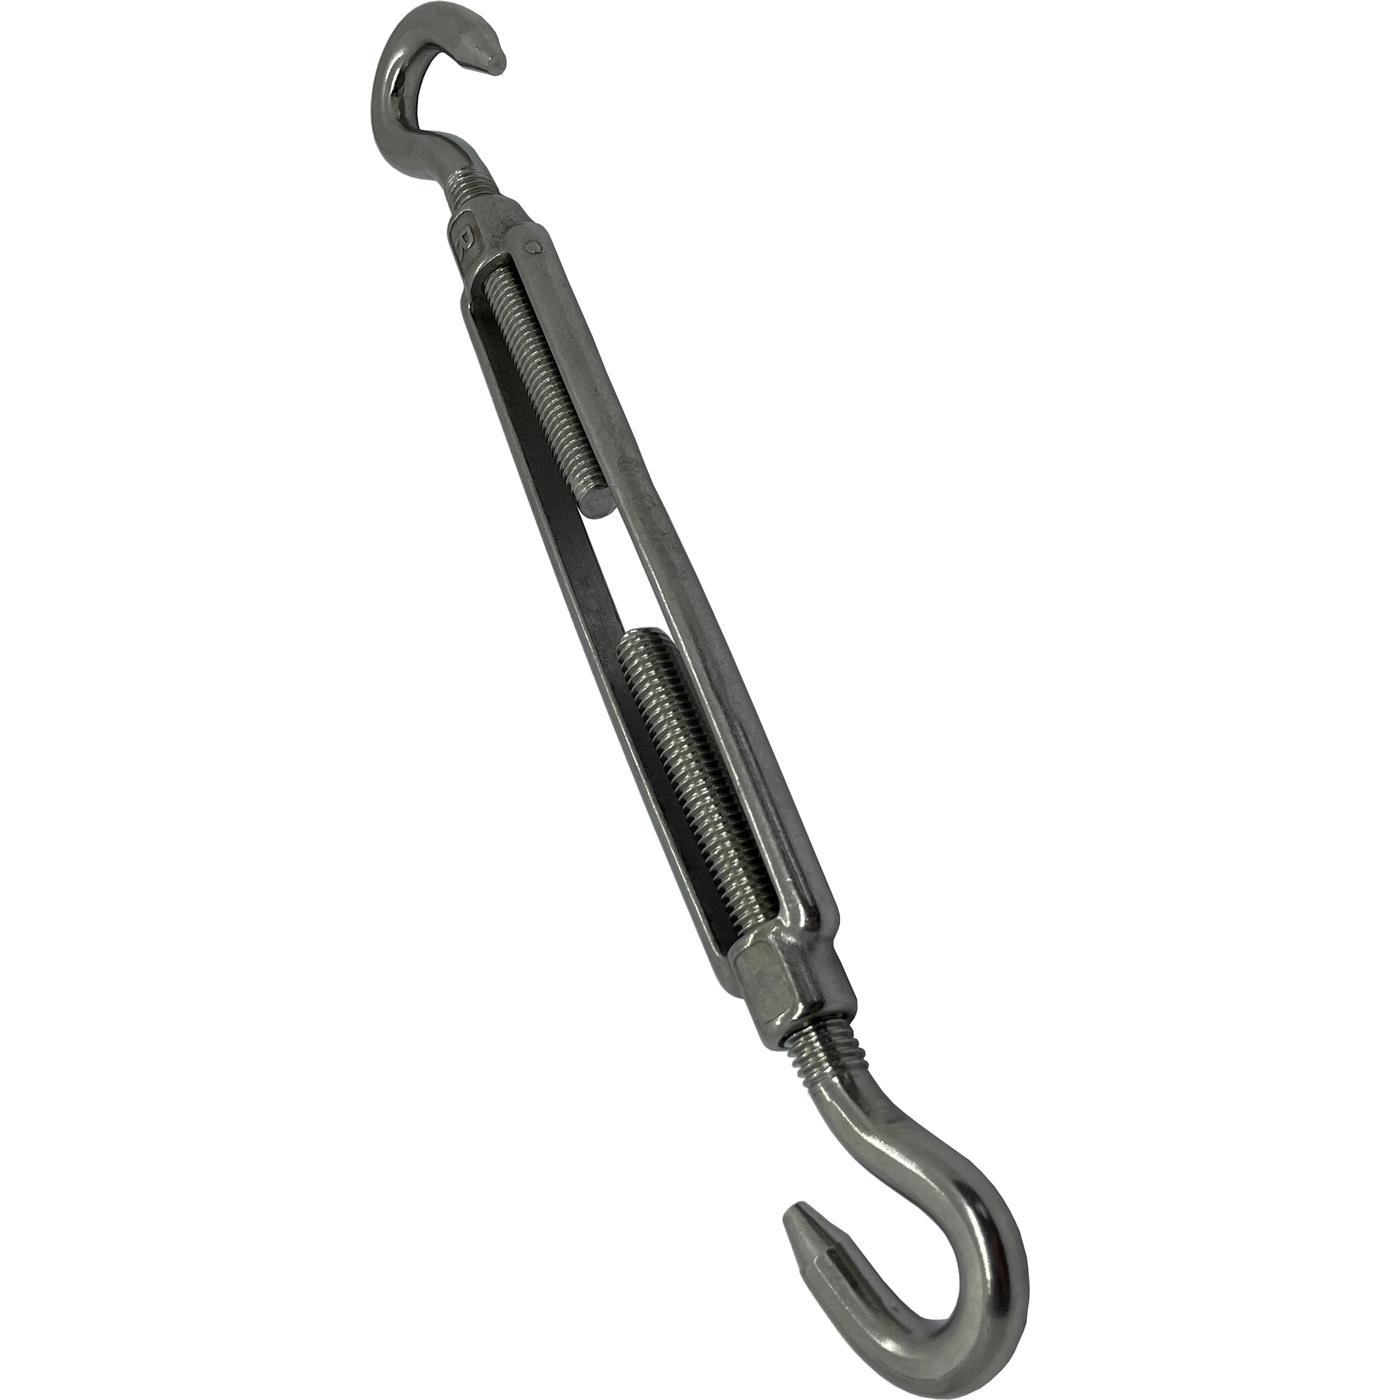 Rope tensioner Hook-Hook Stainless steel V4A 316 M10 Turnbuckle Shroud clamp